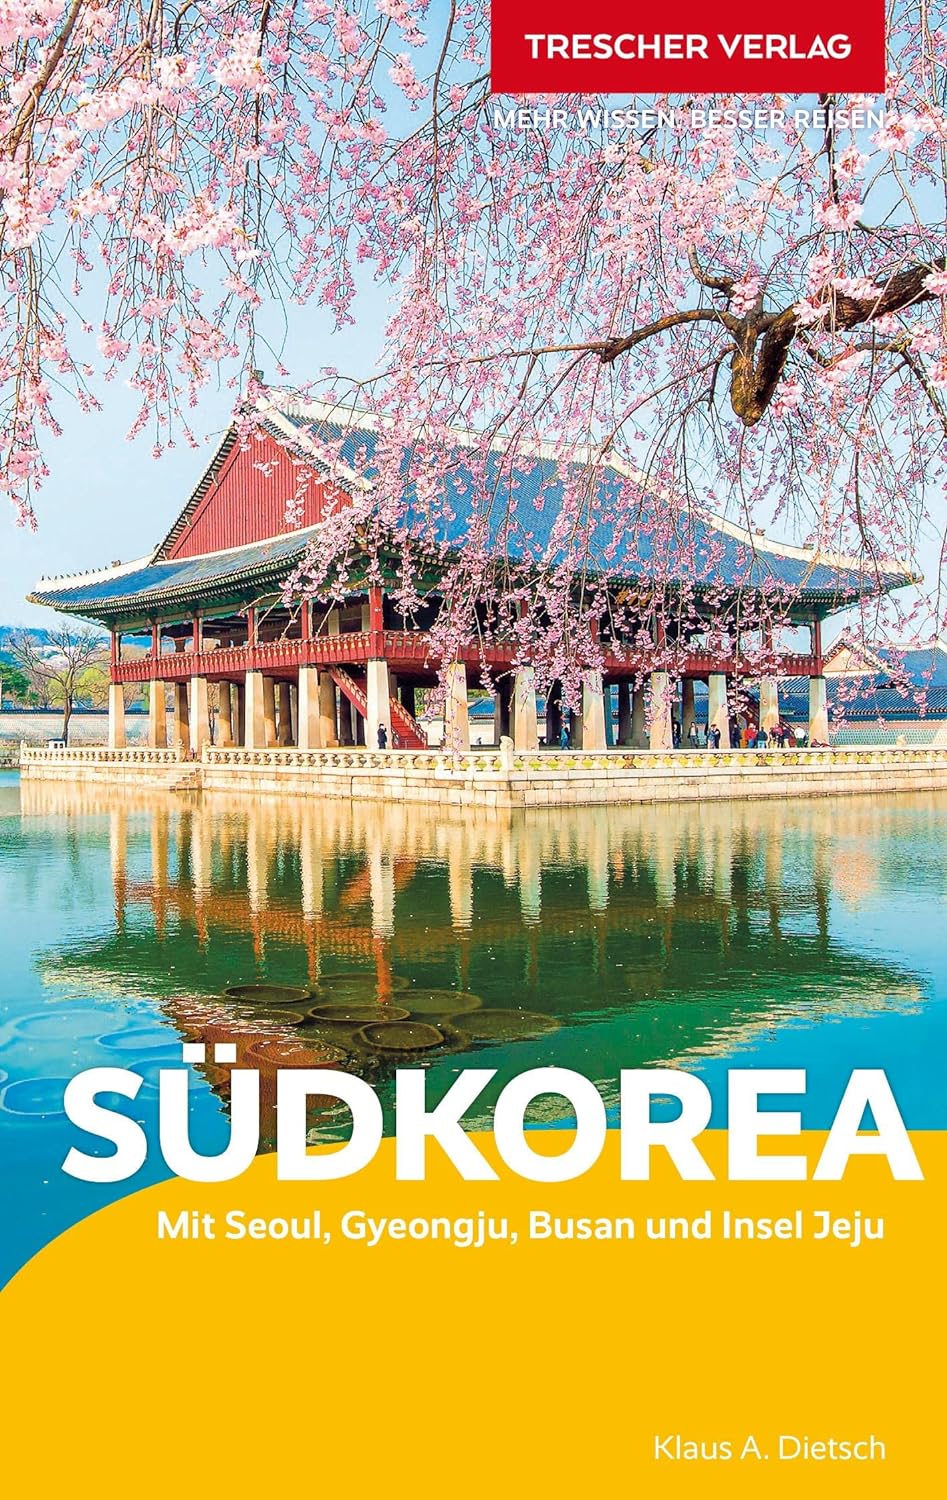 Online bestellen: Reisgids Reiseführer Südkorea - Zuid Korea | Trescher Verlag